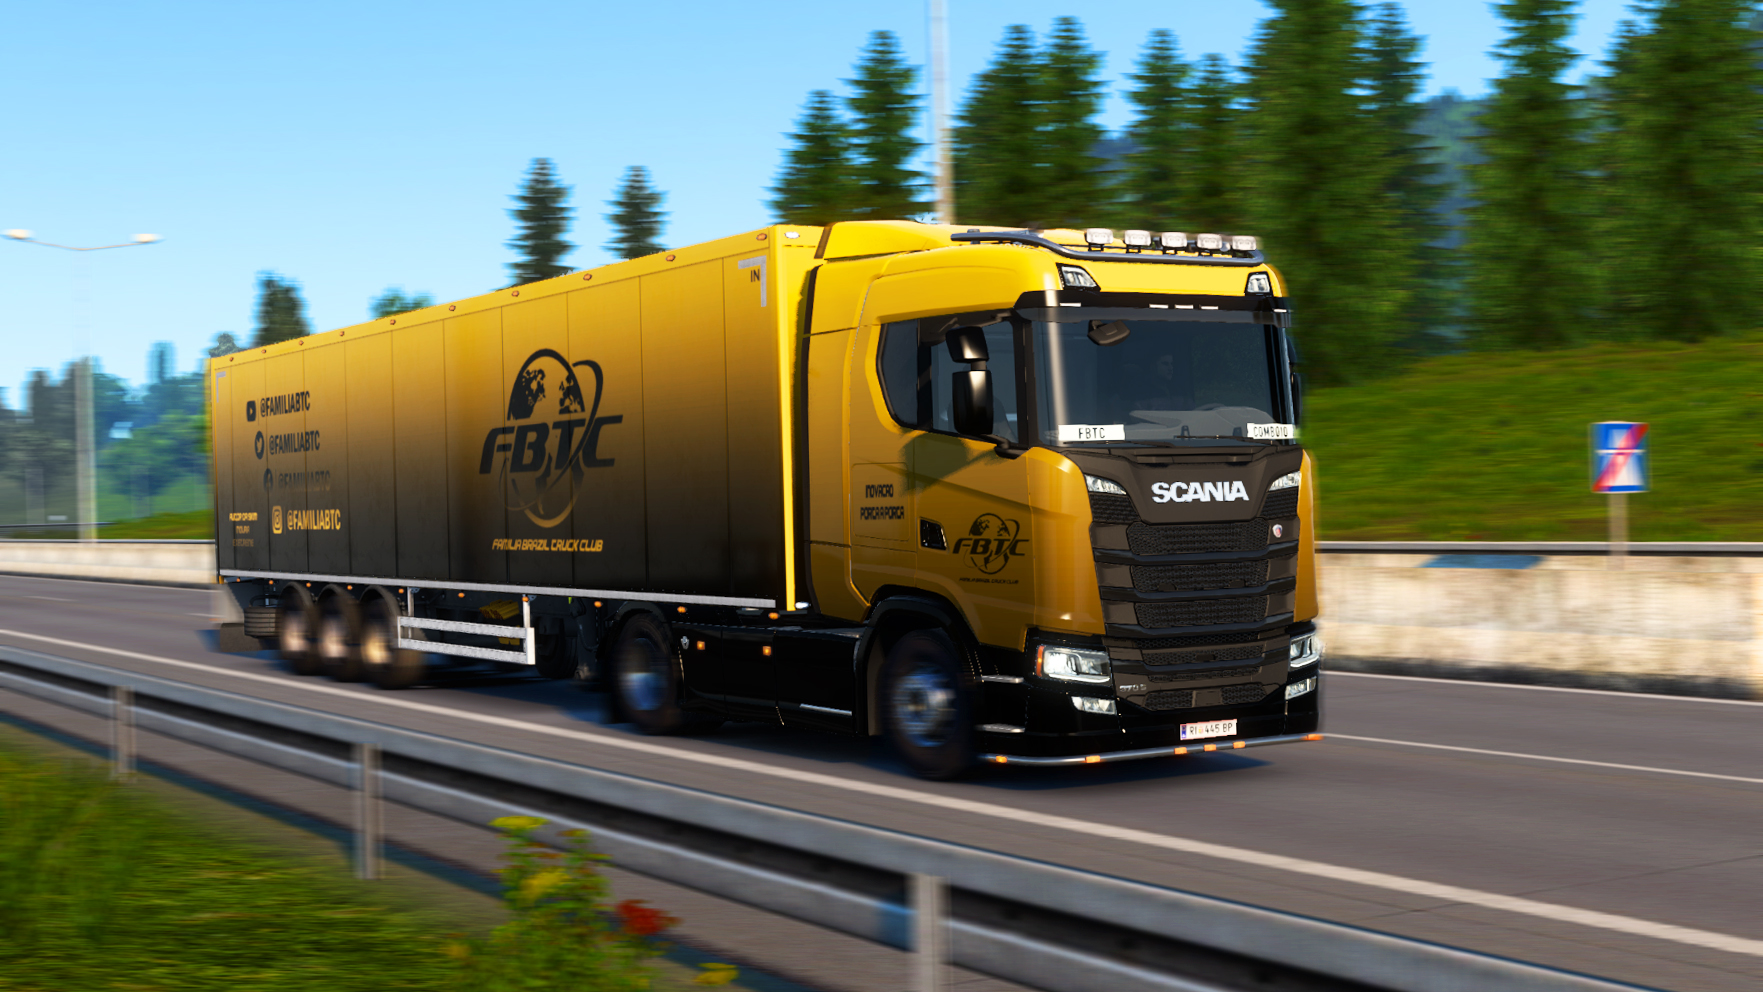 General 1763x992 Euro Truck Simulator 2 PC Jogos VTC FBTC Scania PC gaming Yellow Trucks screen shot truck vehicle